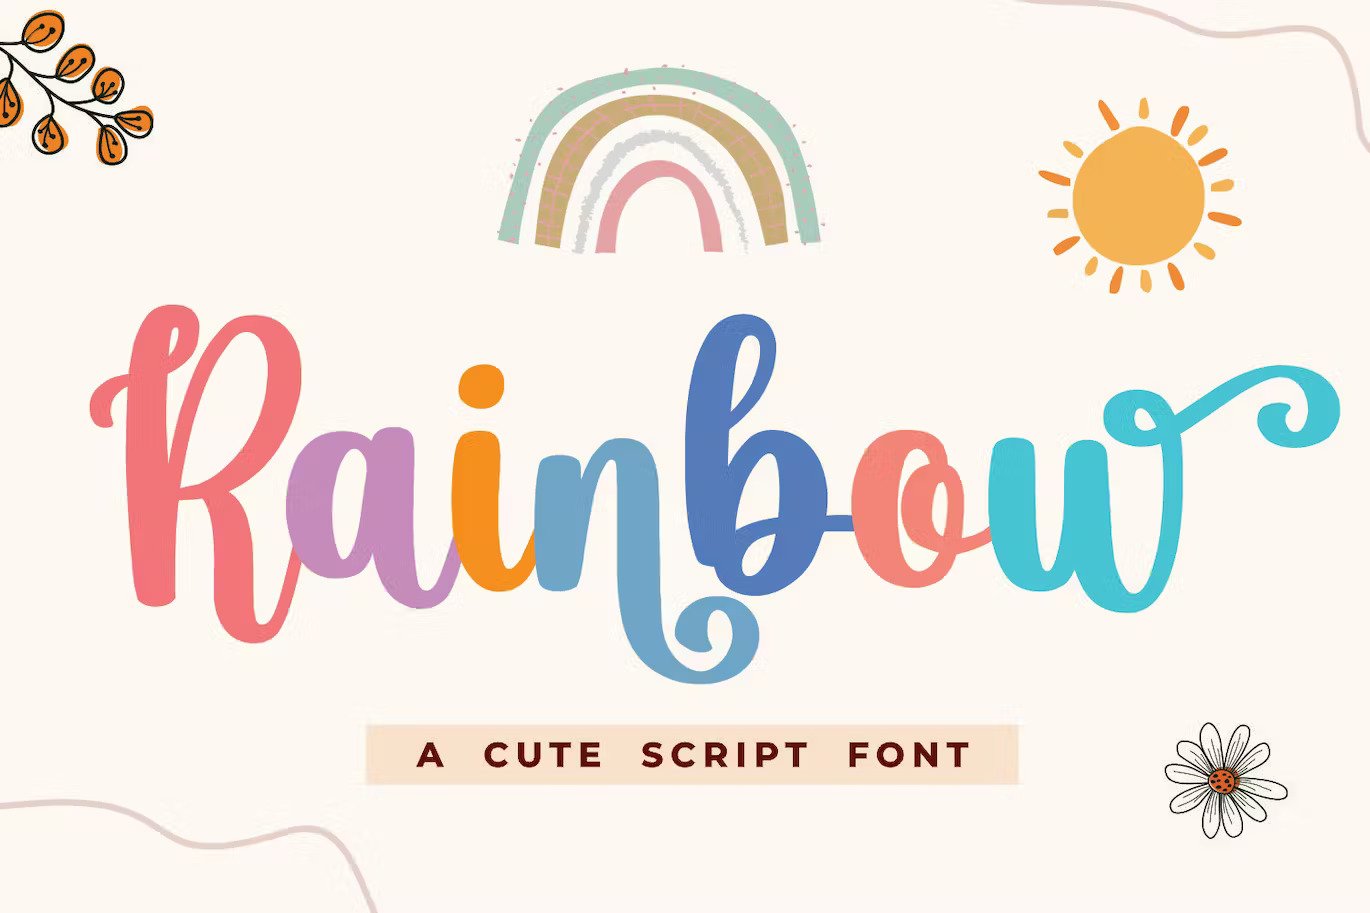 A cute script font